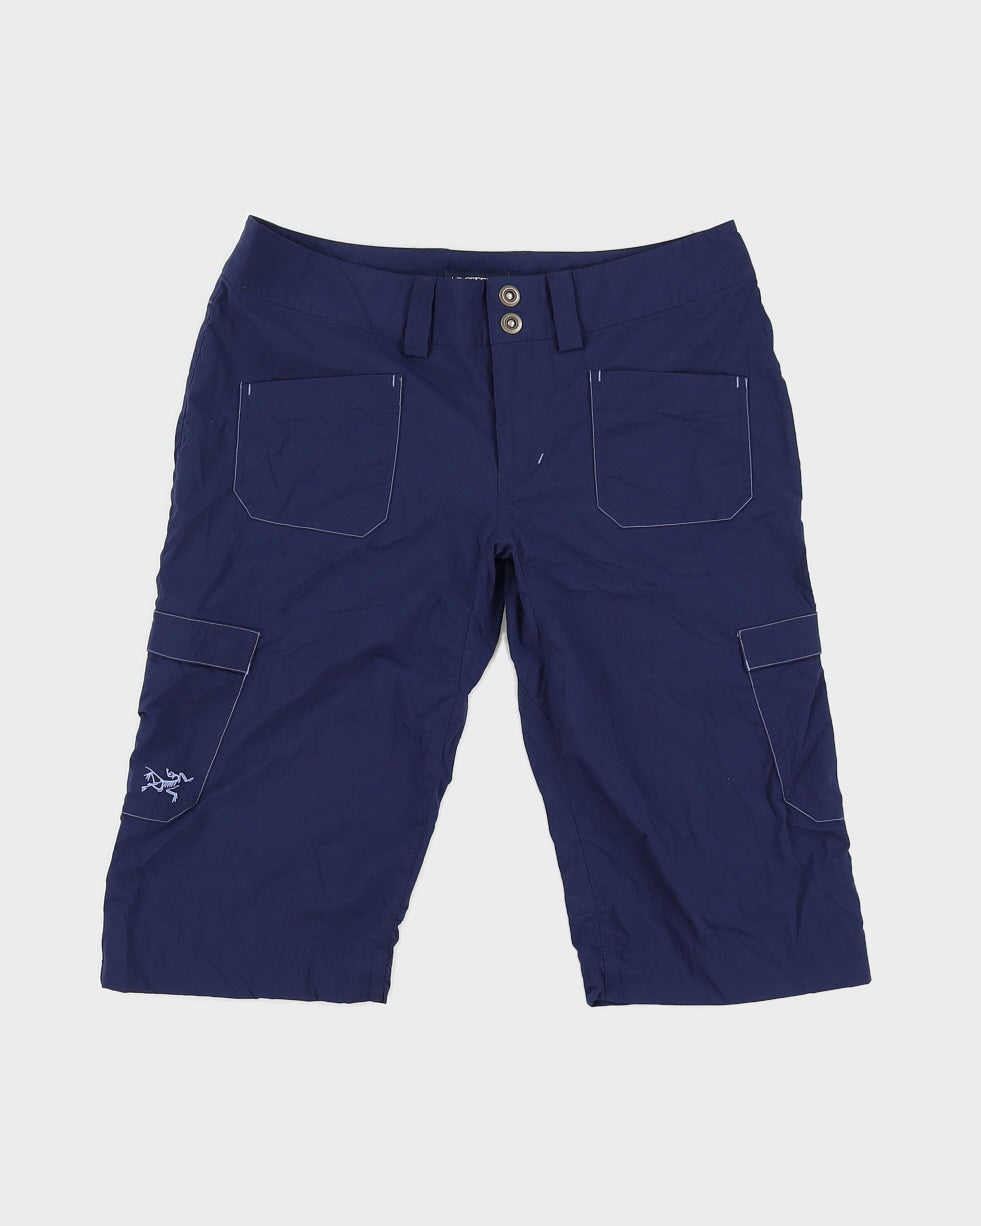 Arct'teryx Blue Shorts - W33